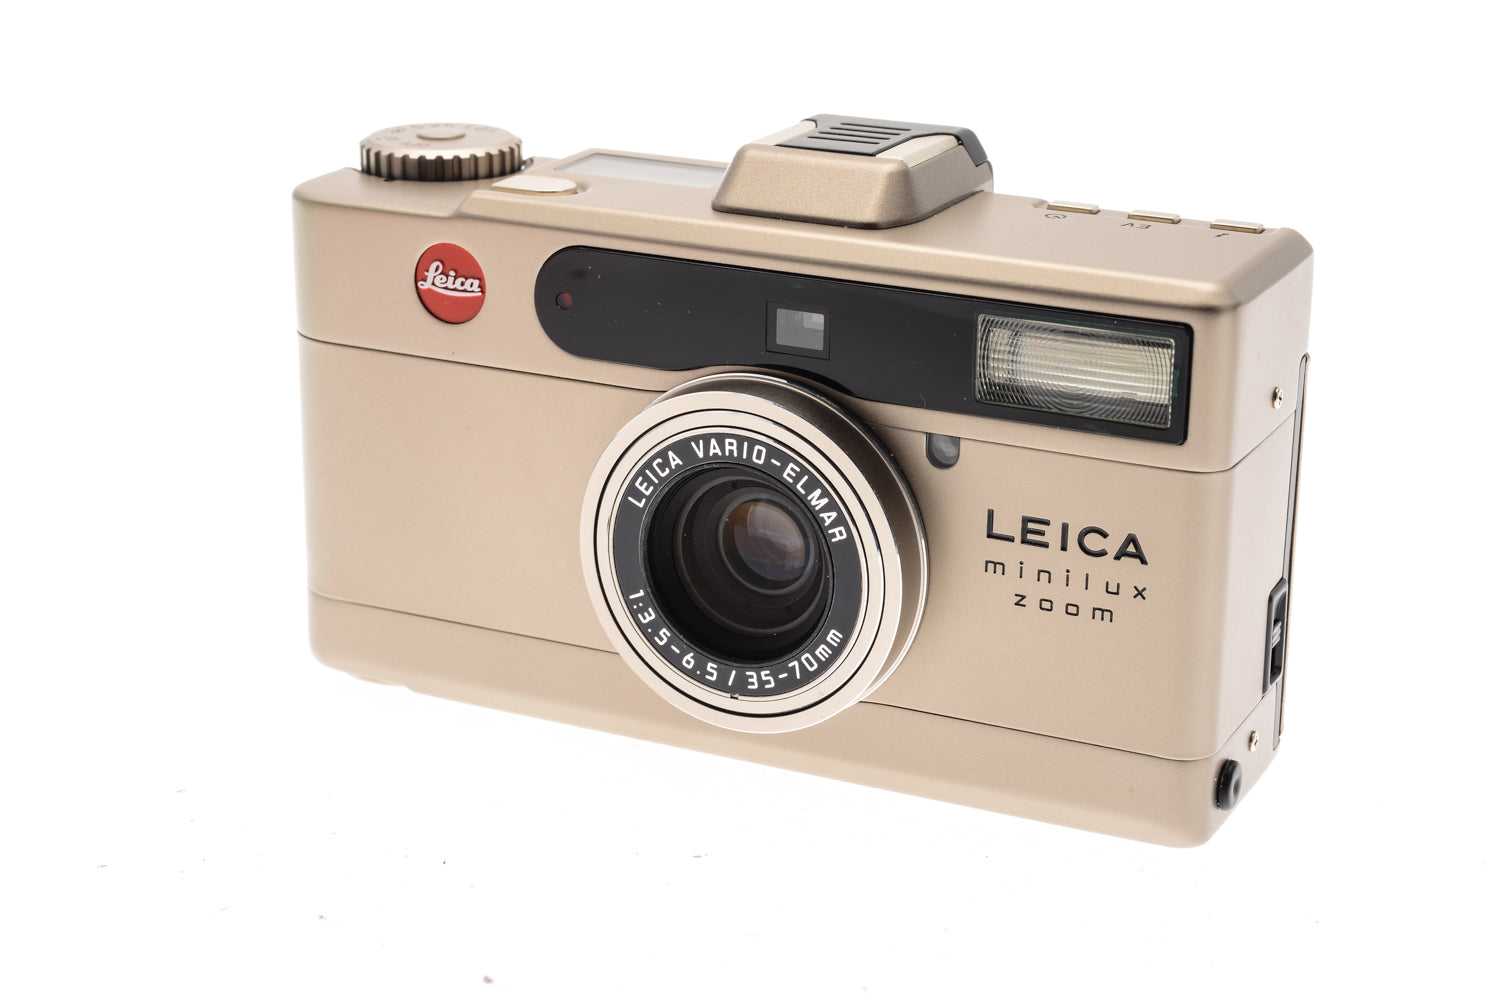 Leica minilux zoom 動作確認済み-